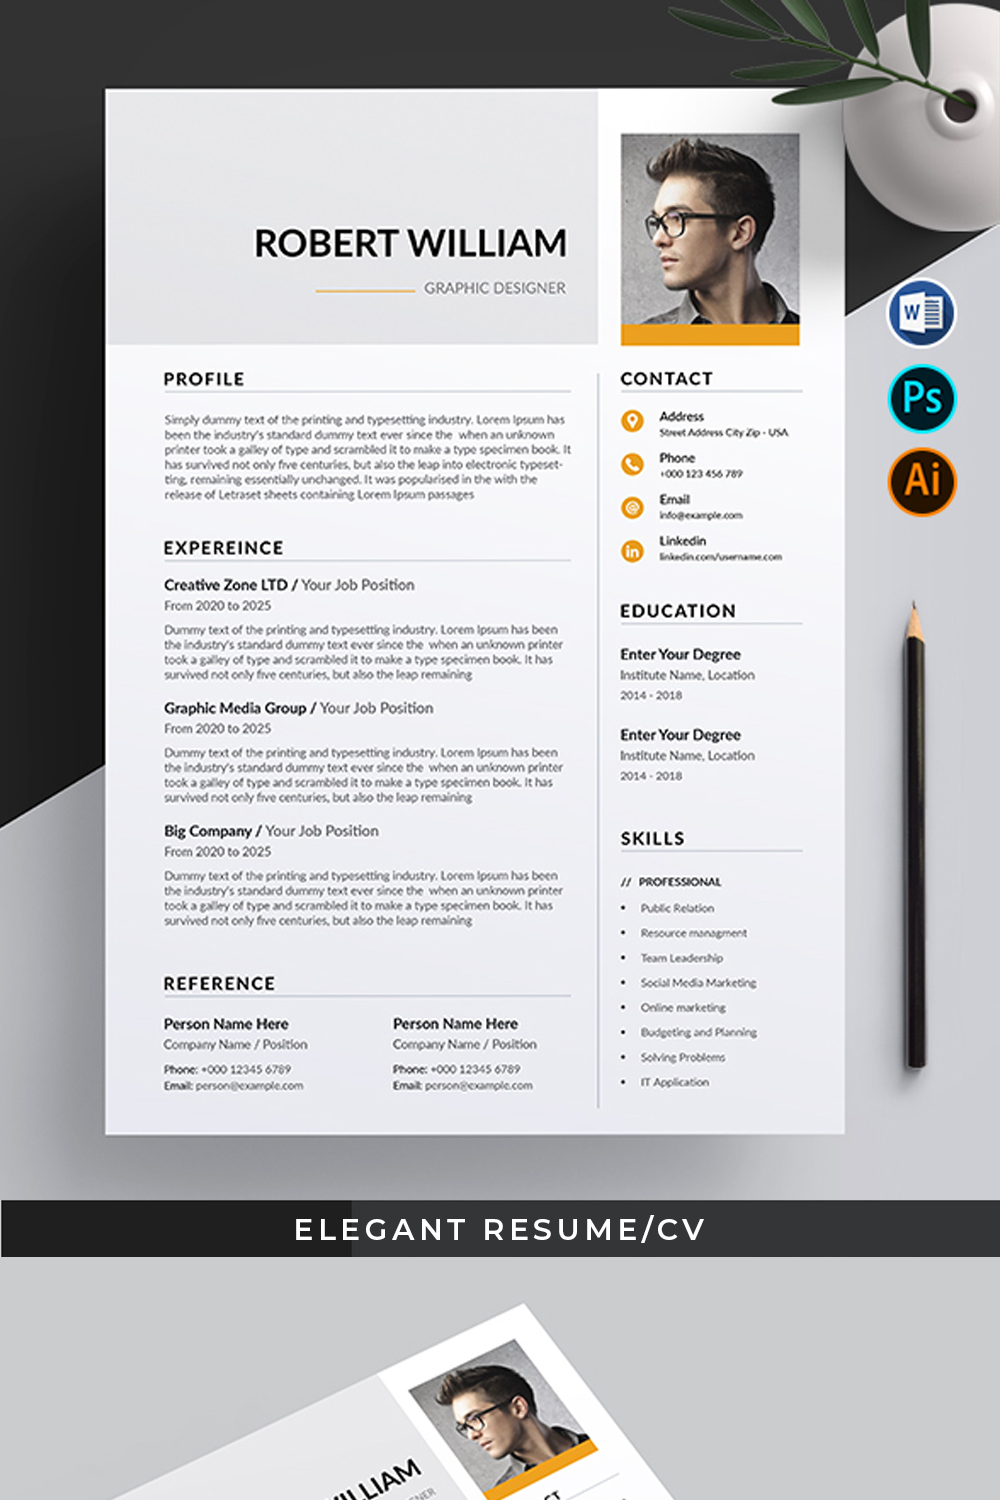 The Word Resume/CV Template pinterest image.